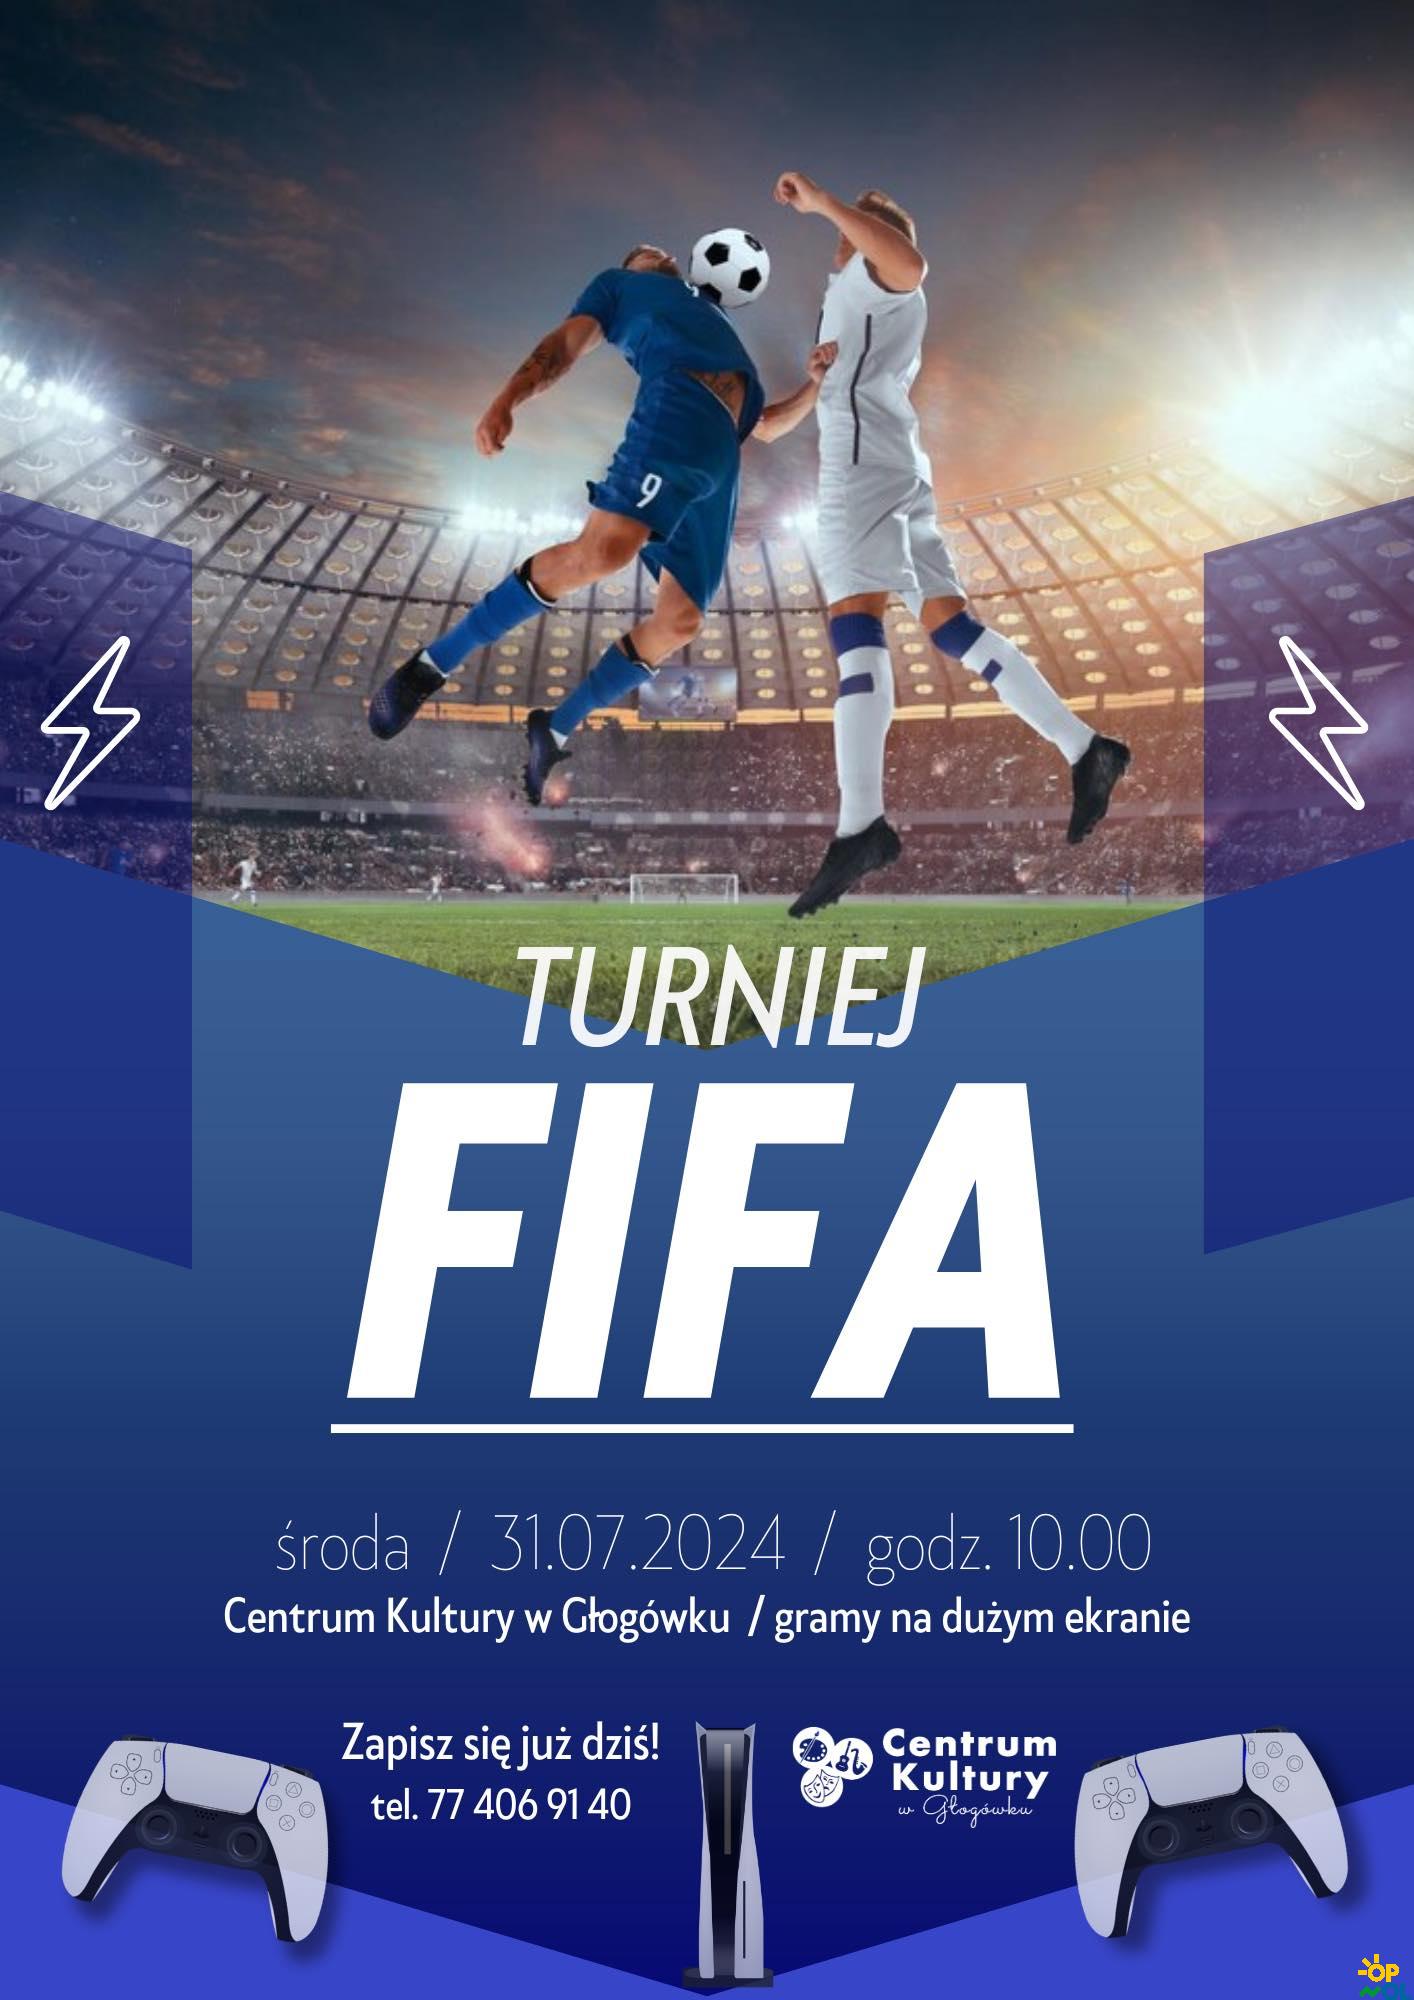 Turniej FIFA  /  turnaj FIFA